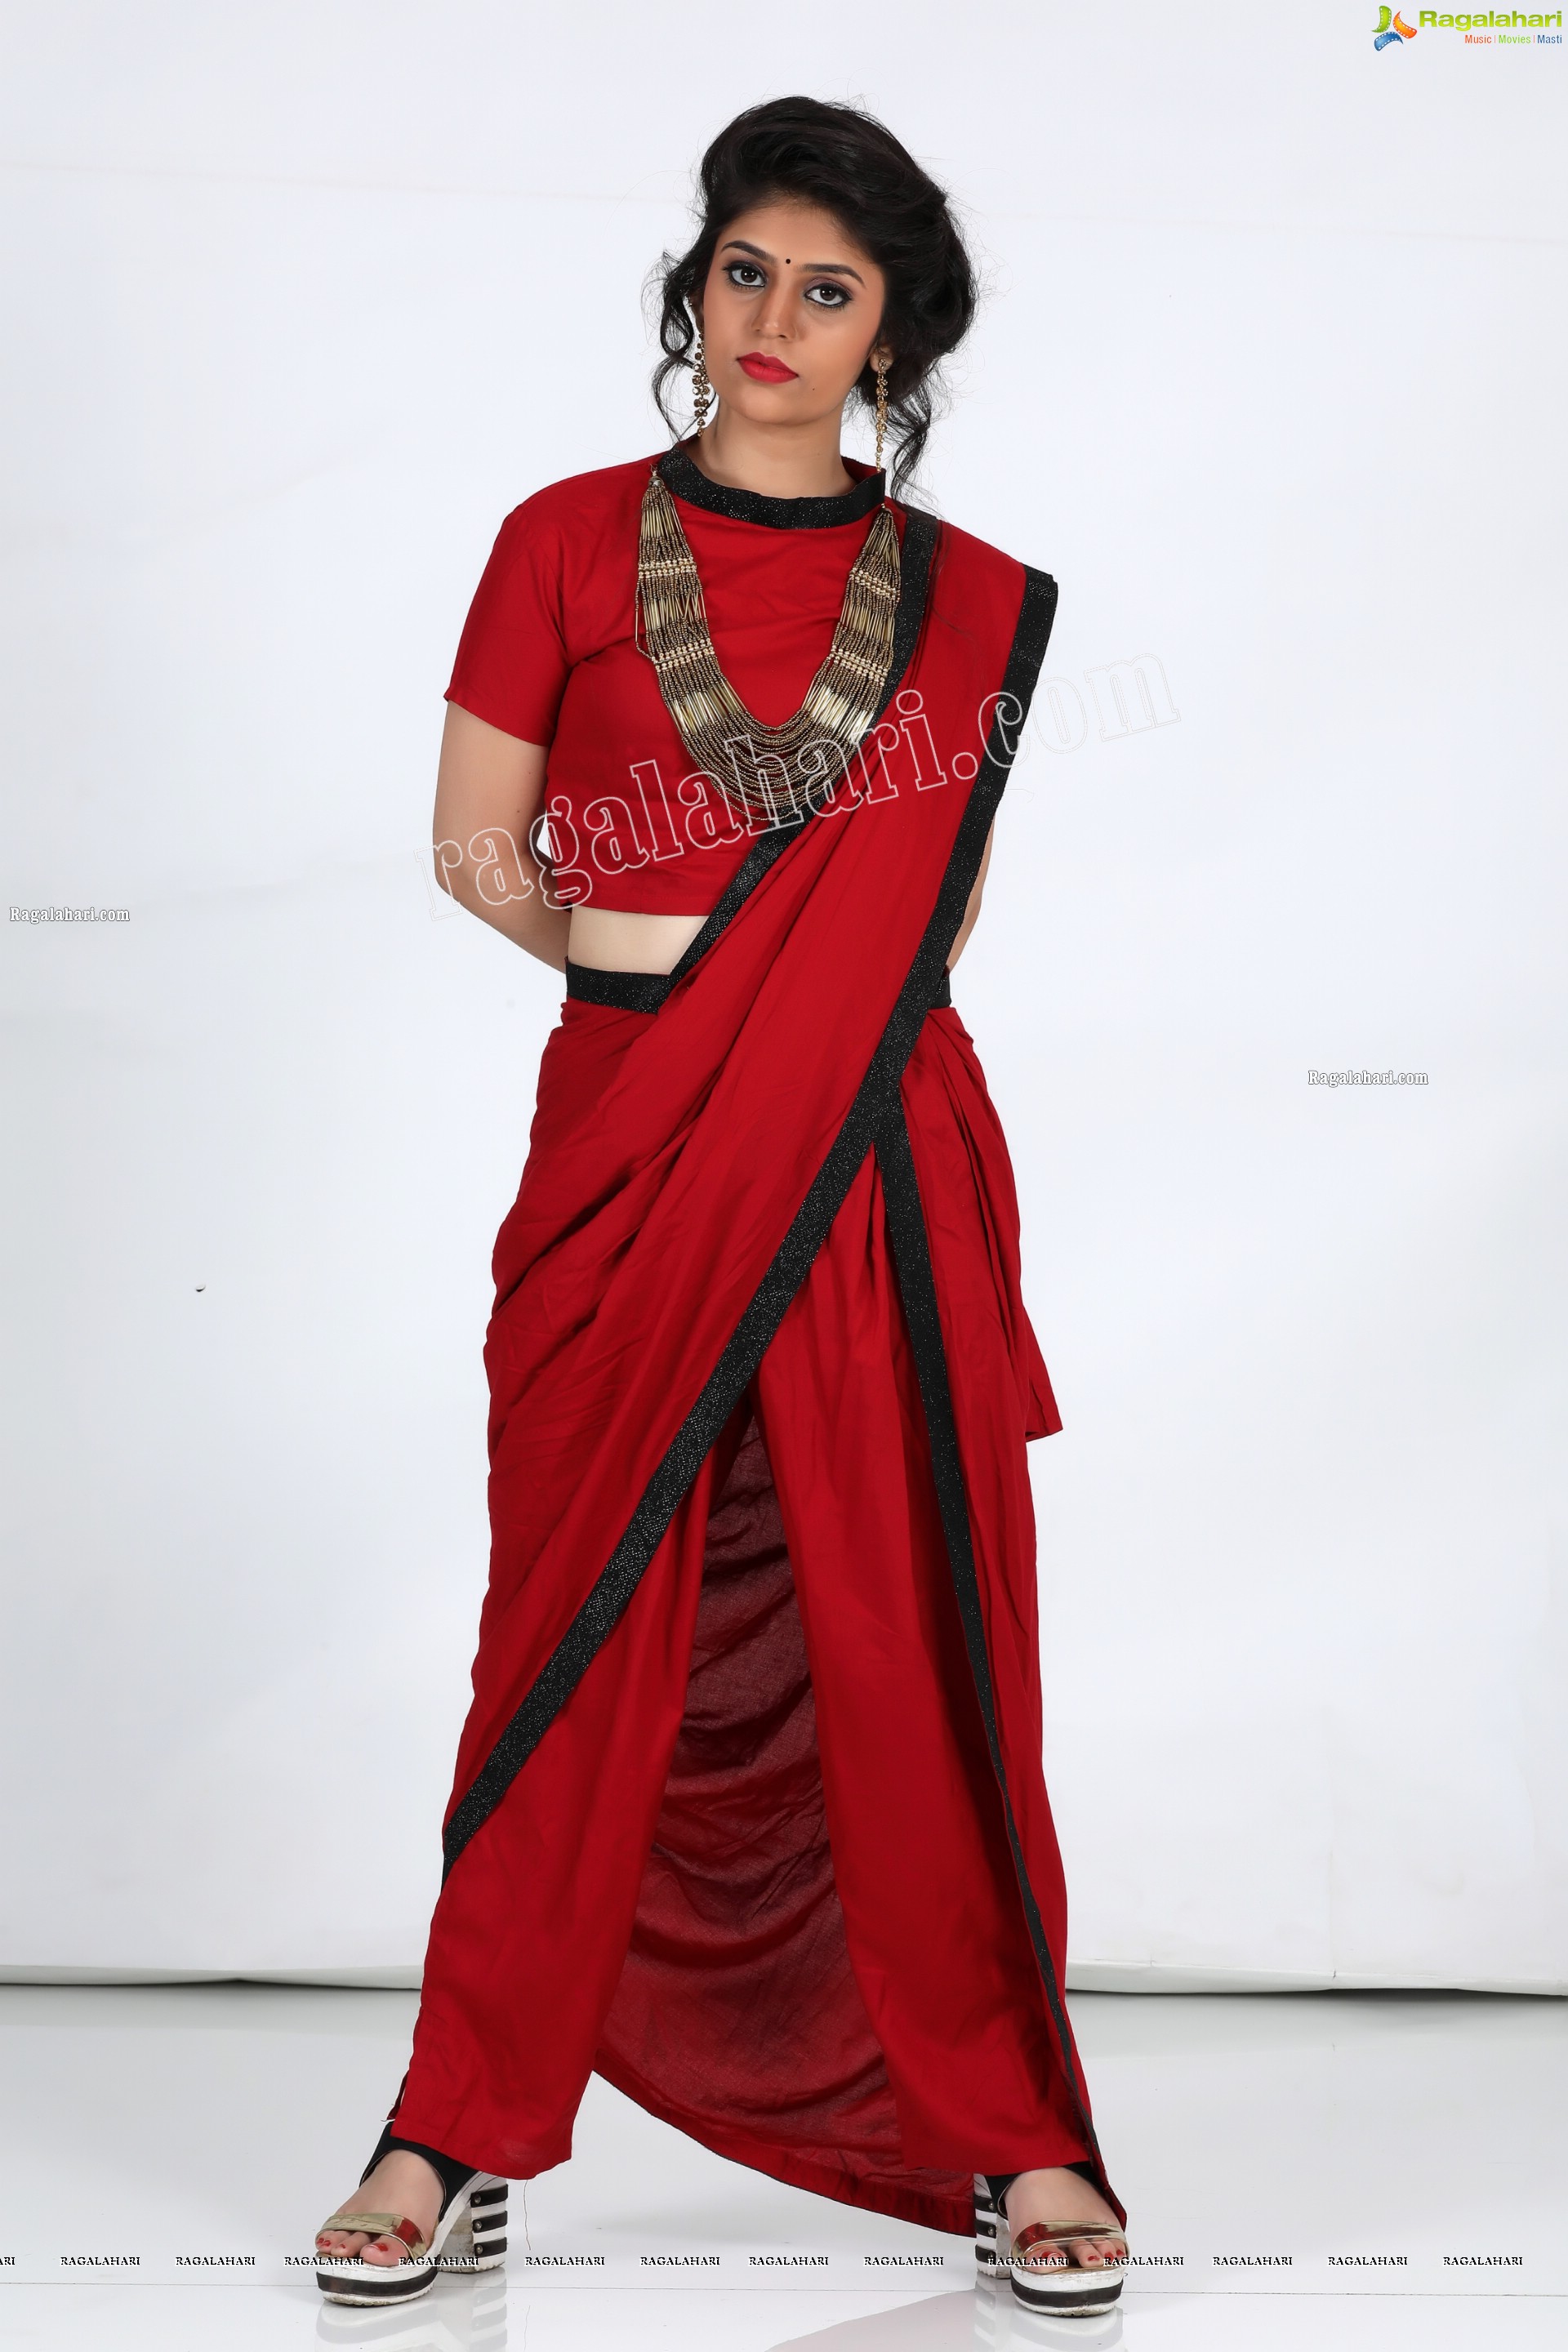 Viswa Sri Bandhavi in Red Dhoti Saree Exclusive Photo Shoot